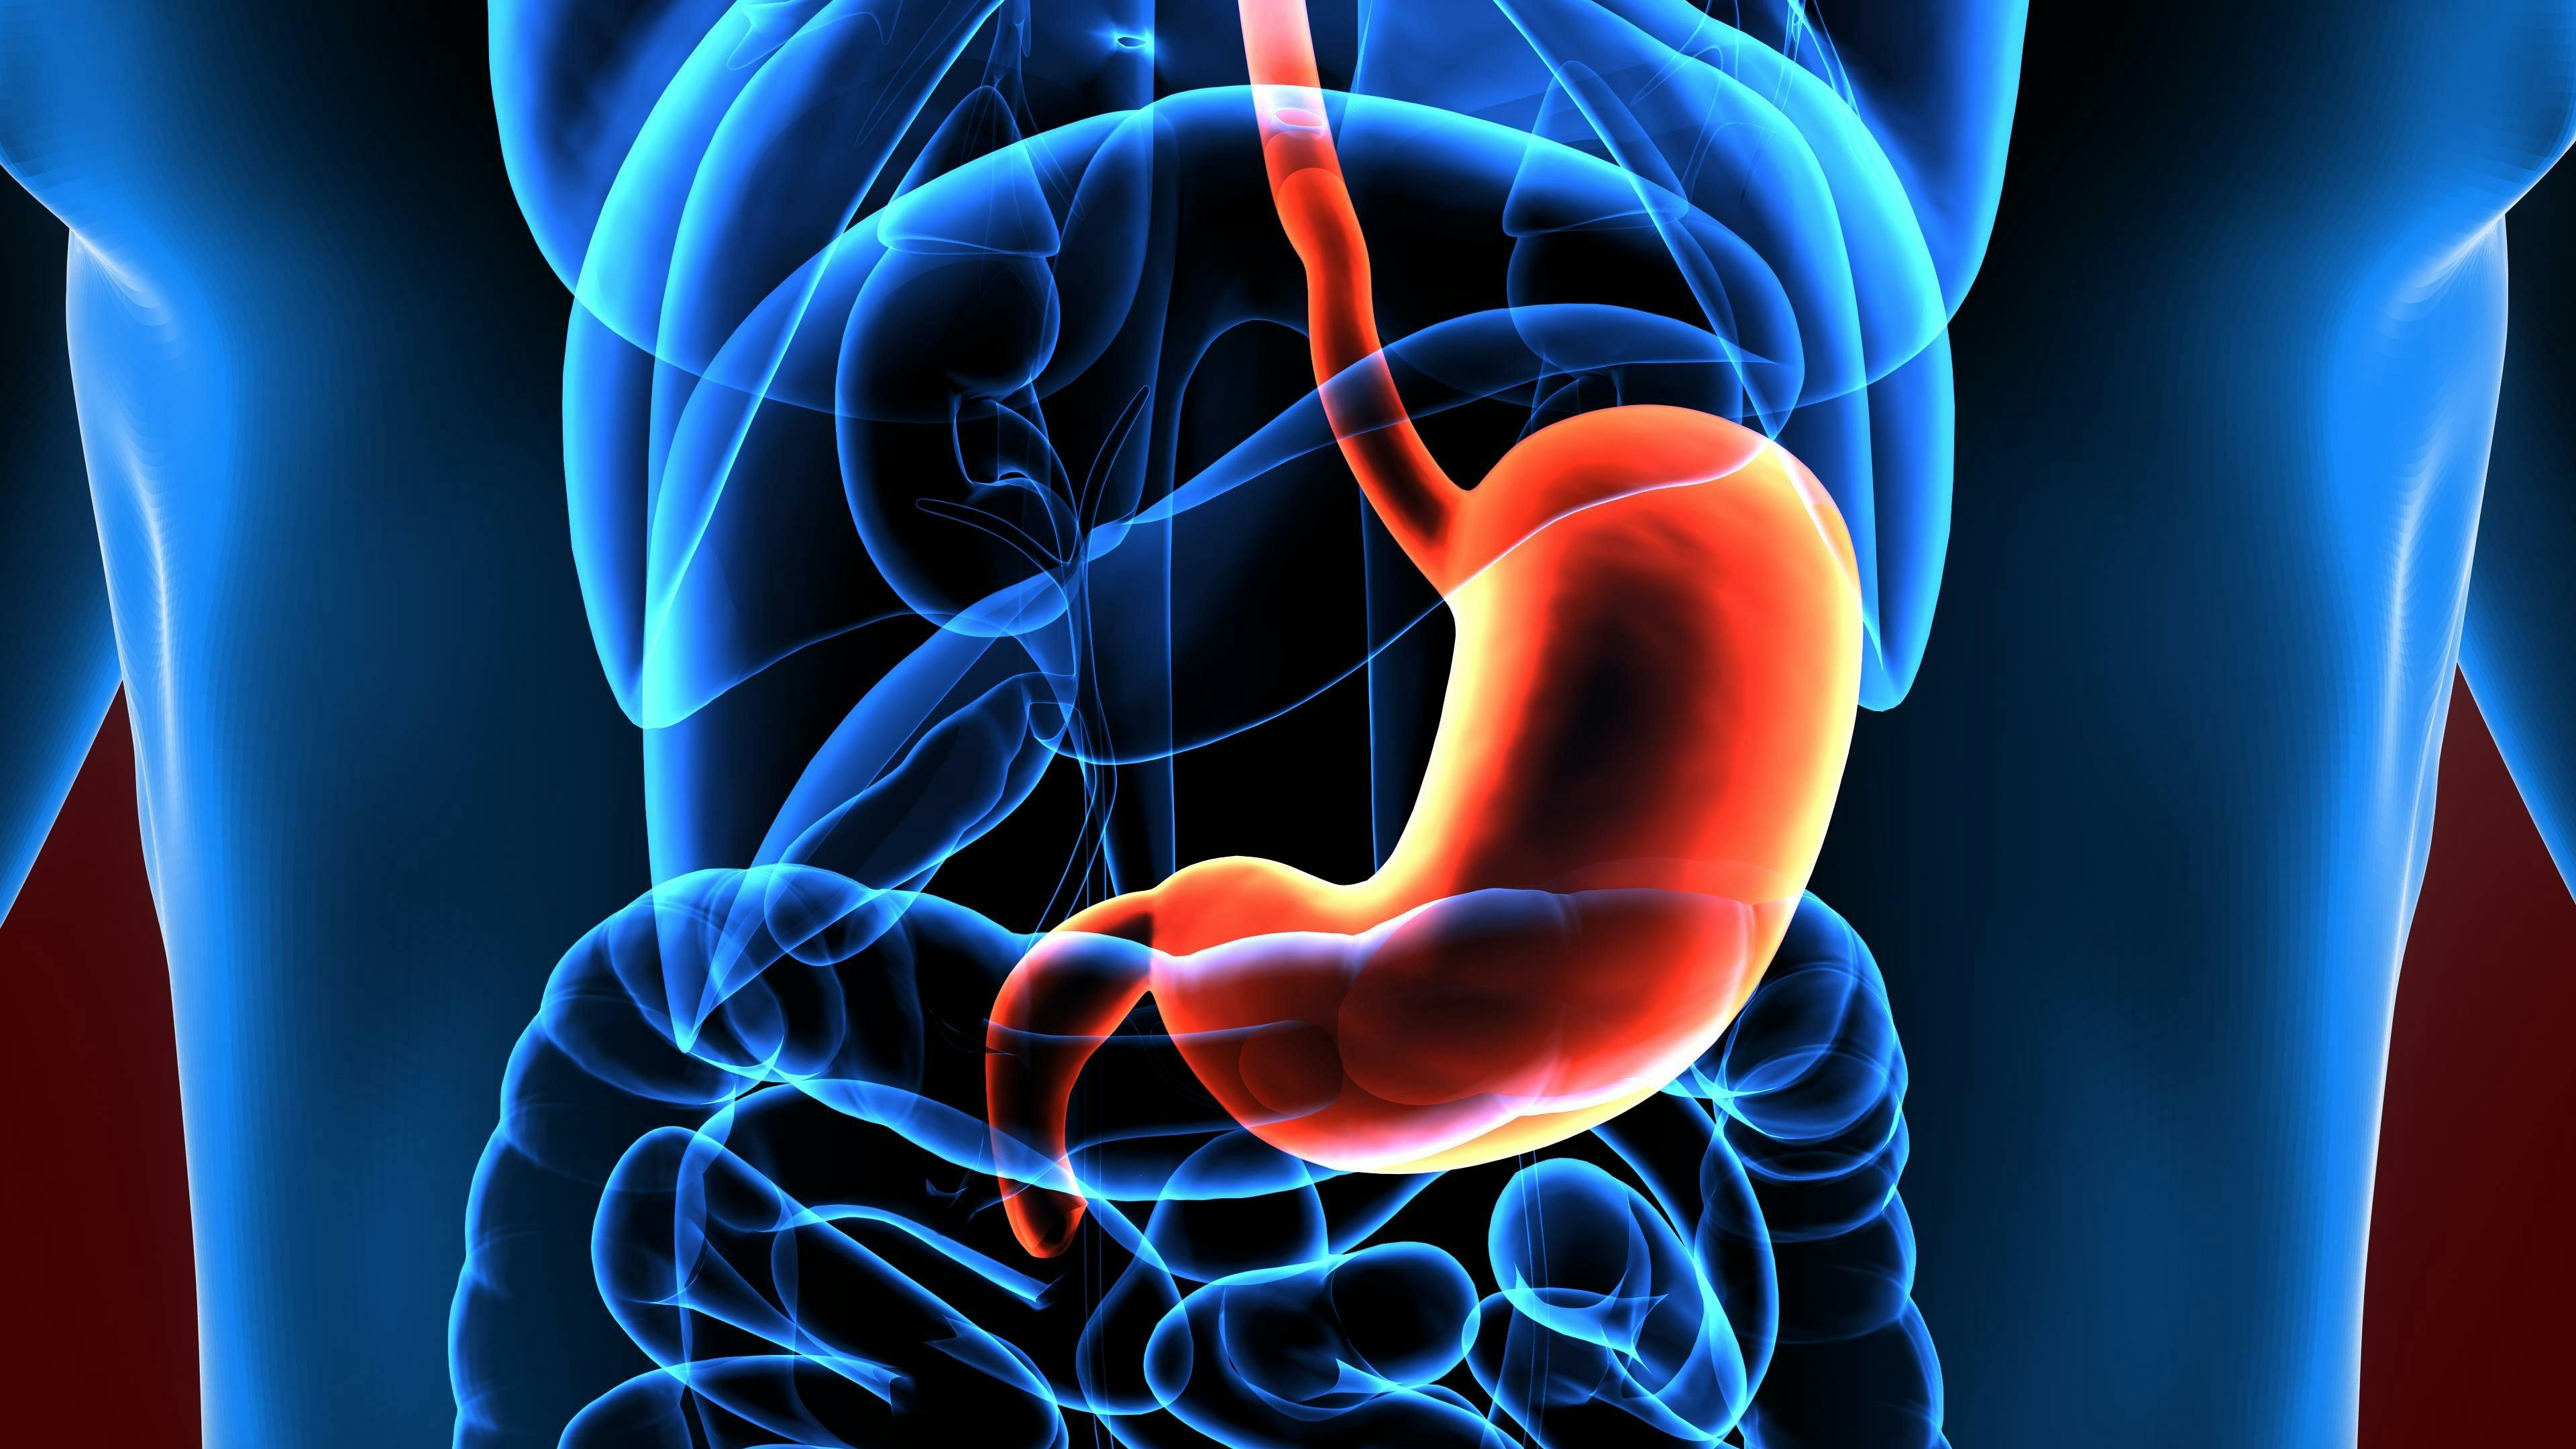 3D rendering of human kidney - stock.adobe.com